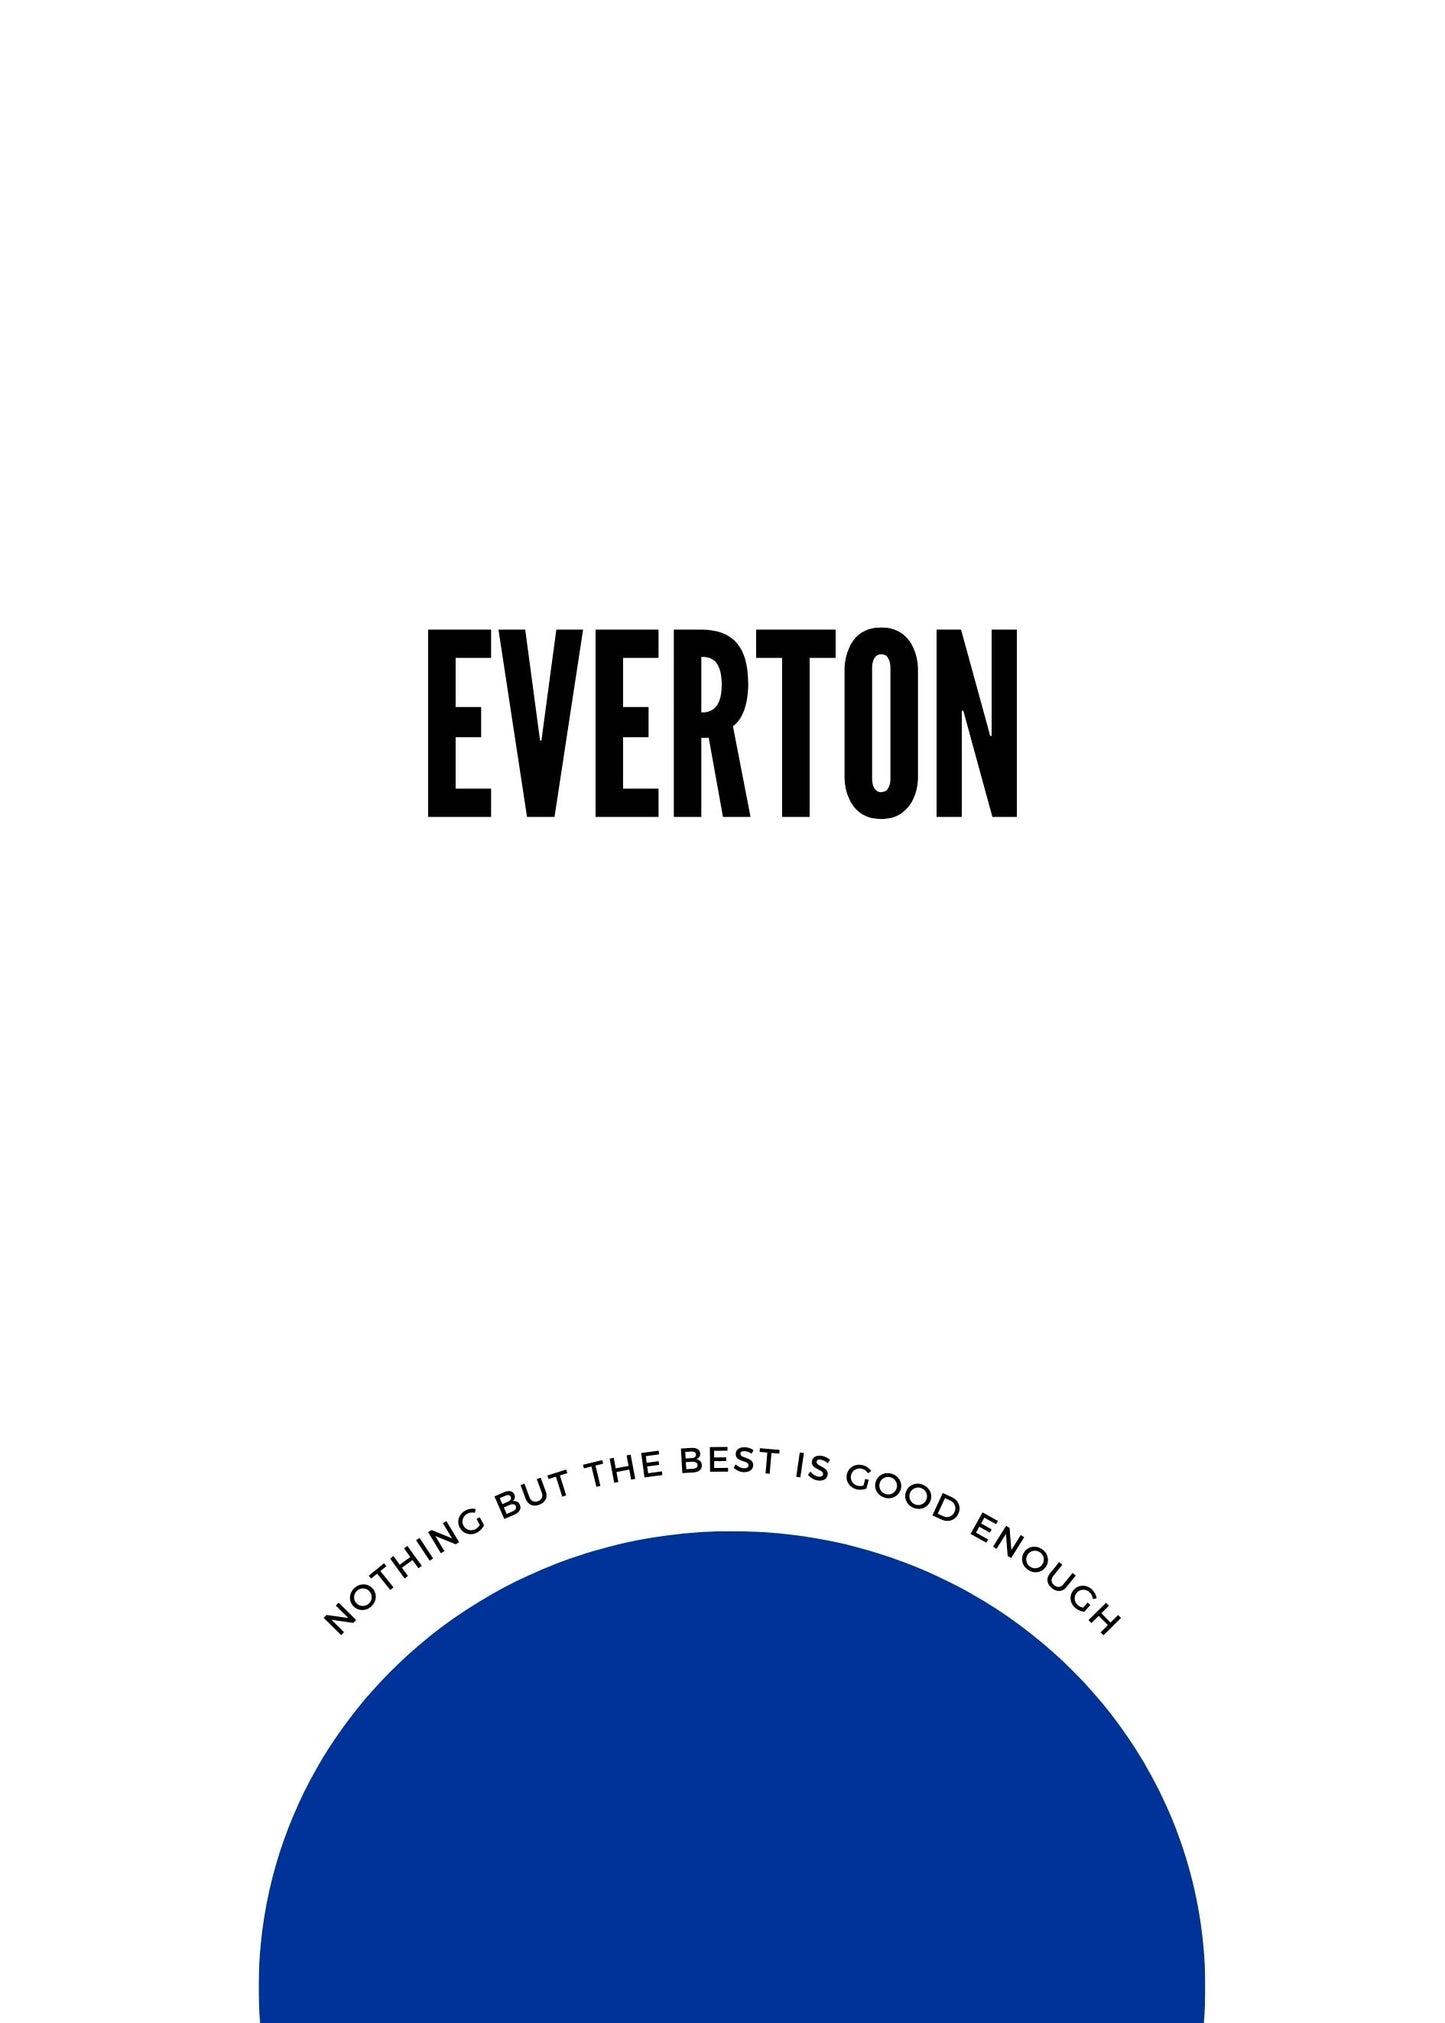 Everton poster